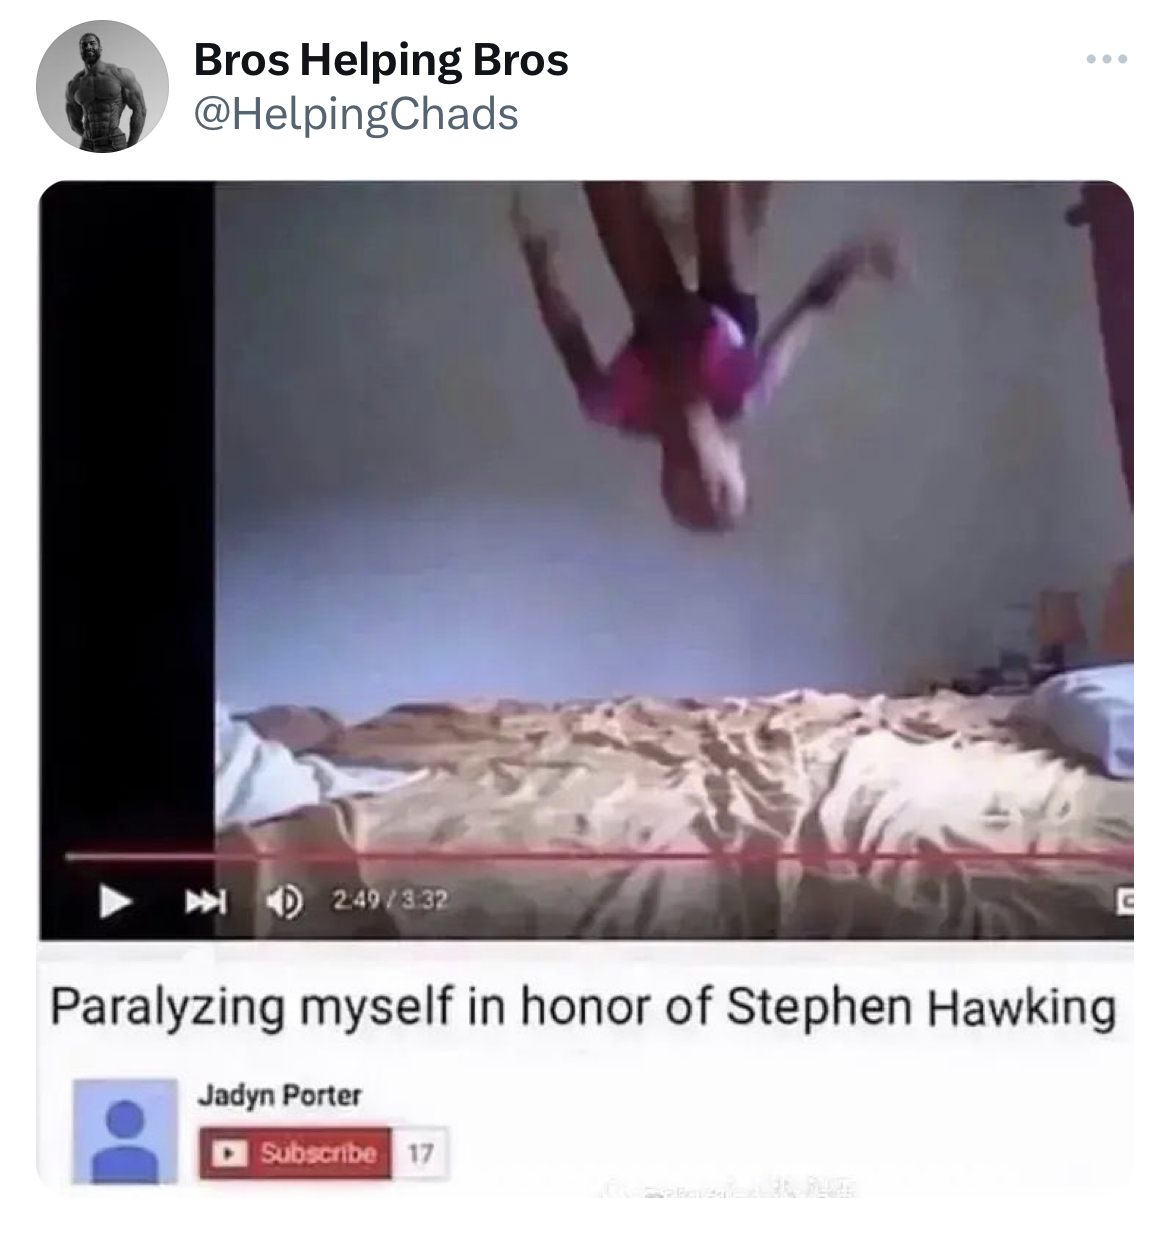 Unhinged Tweets - video - Bros Helping Bros 337 Subscribe 17 E Paralyzing myself in honor of Stephen Hawking Jadyn Porter